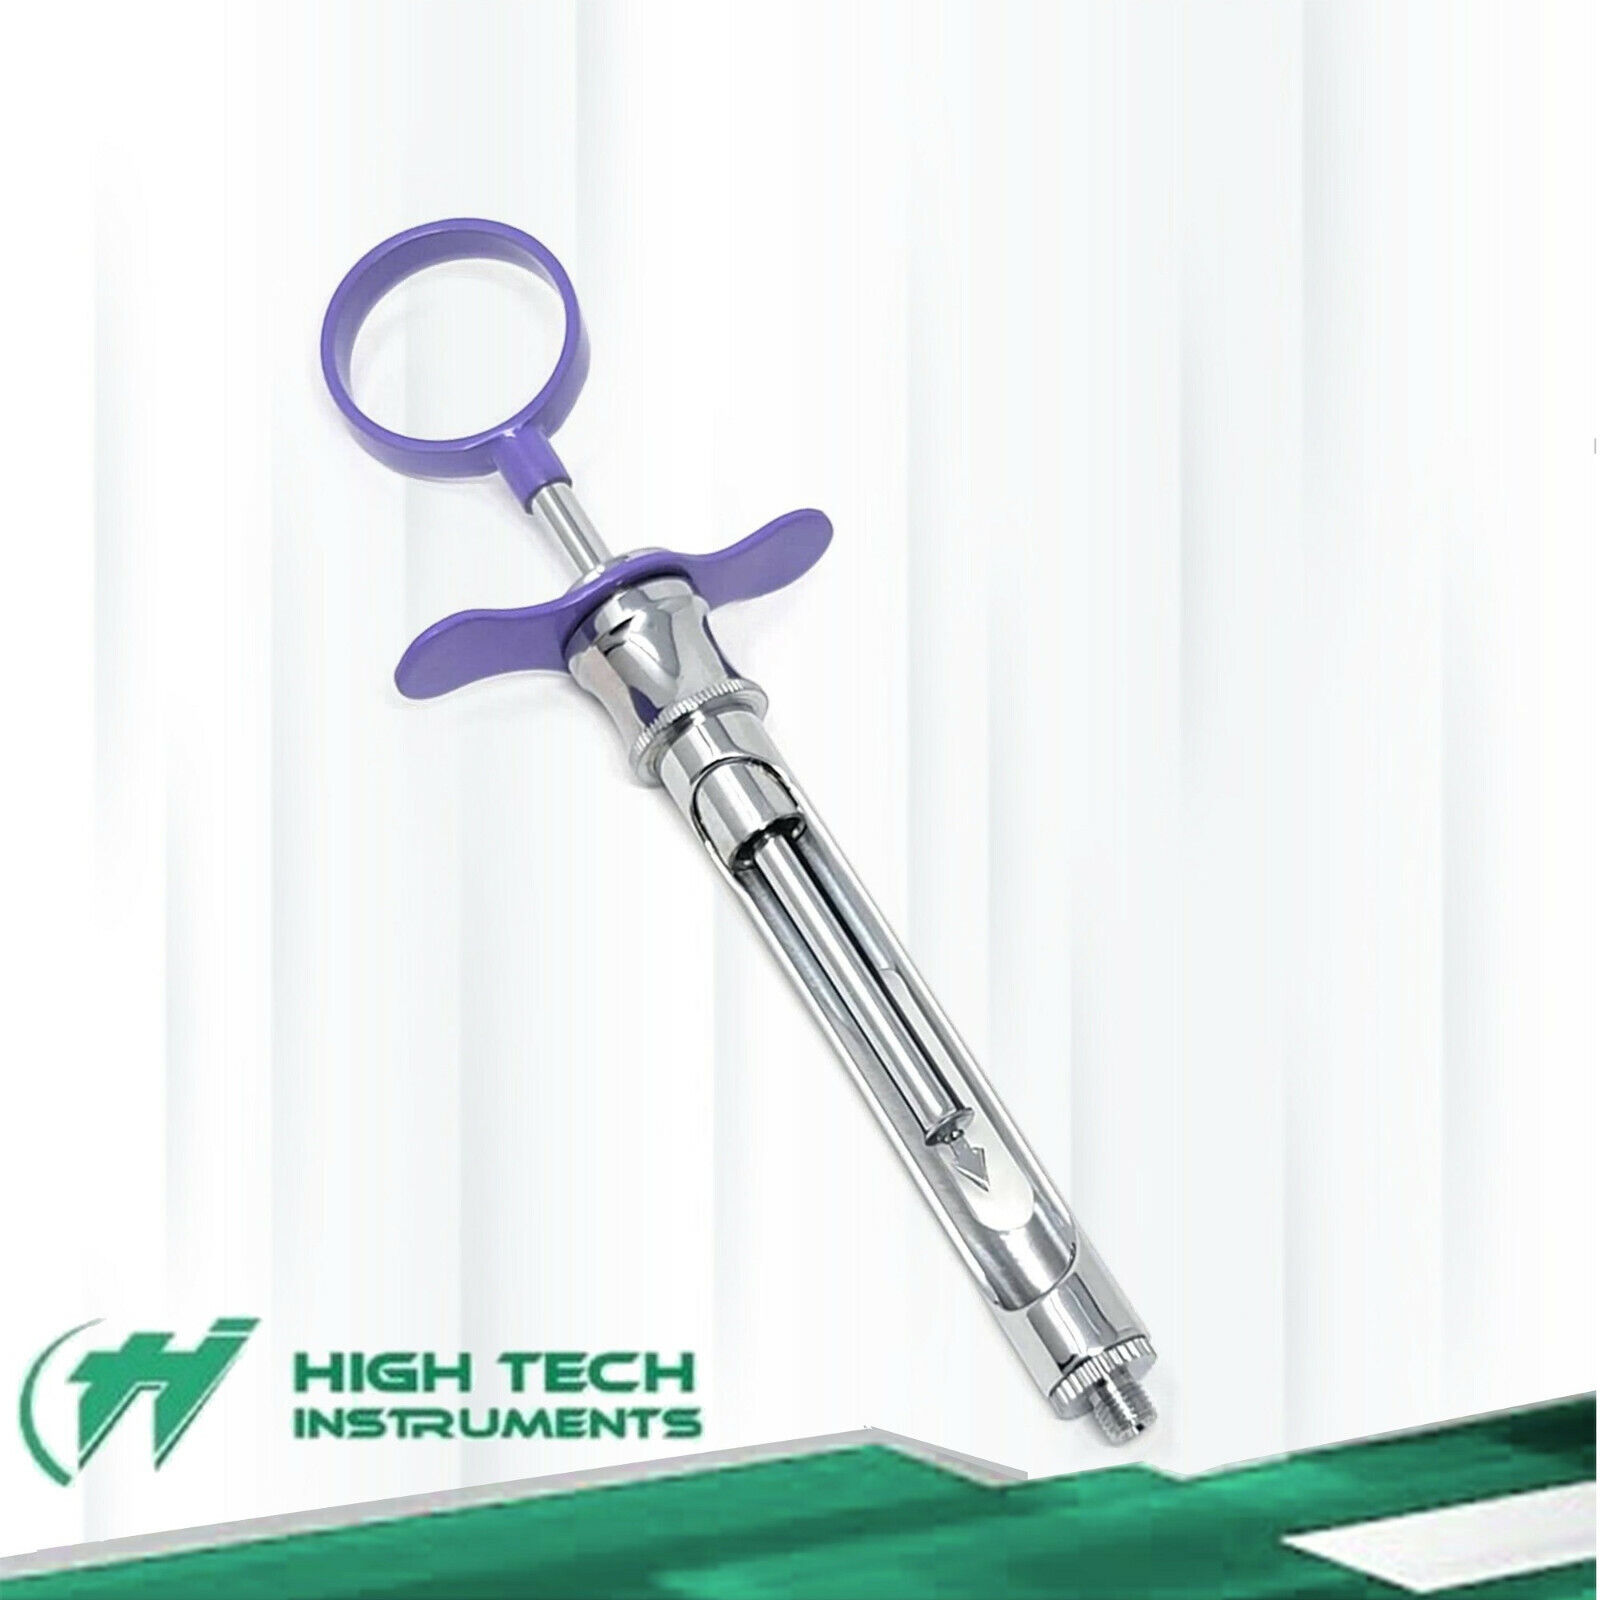 6 Premium Dental Anesthetic Syringe Self-Aspirating 1.8CC-Dental Instruments-A++ HIGH TECH INSTRUMENTS Does Not Apply - фотография #4